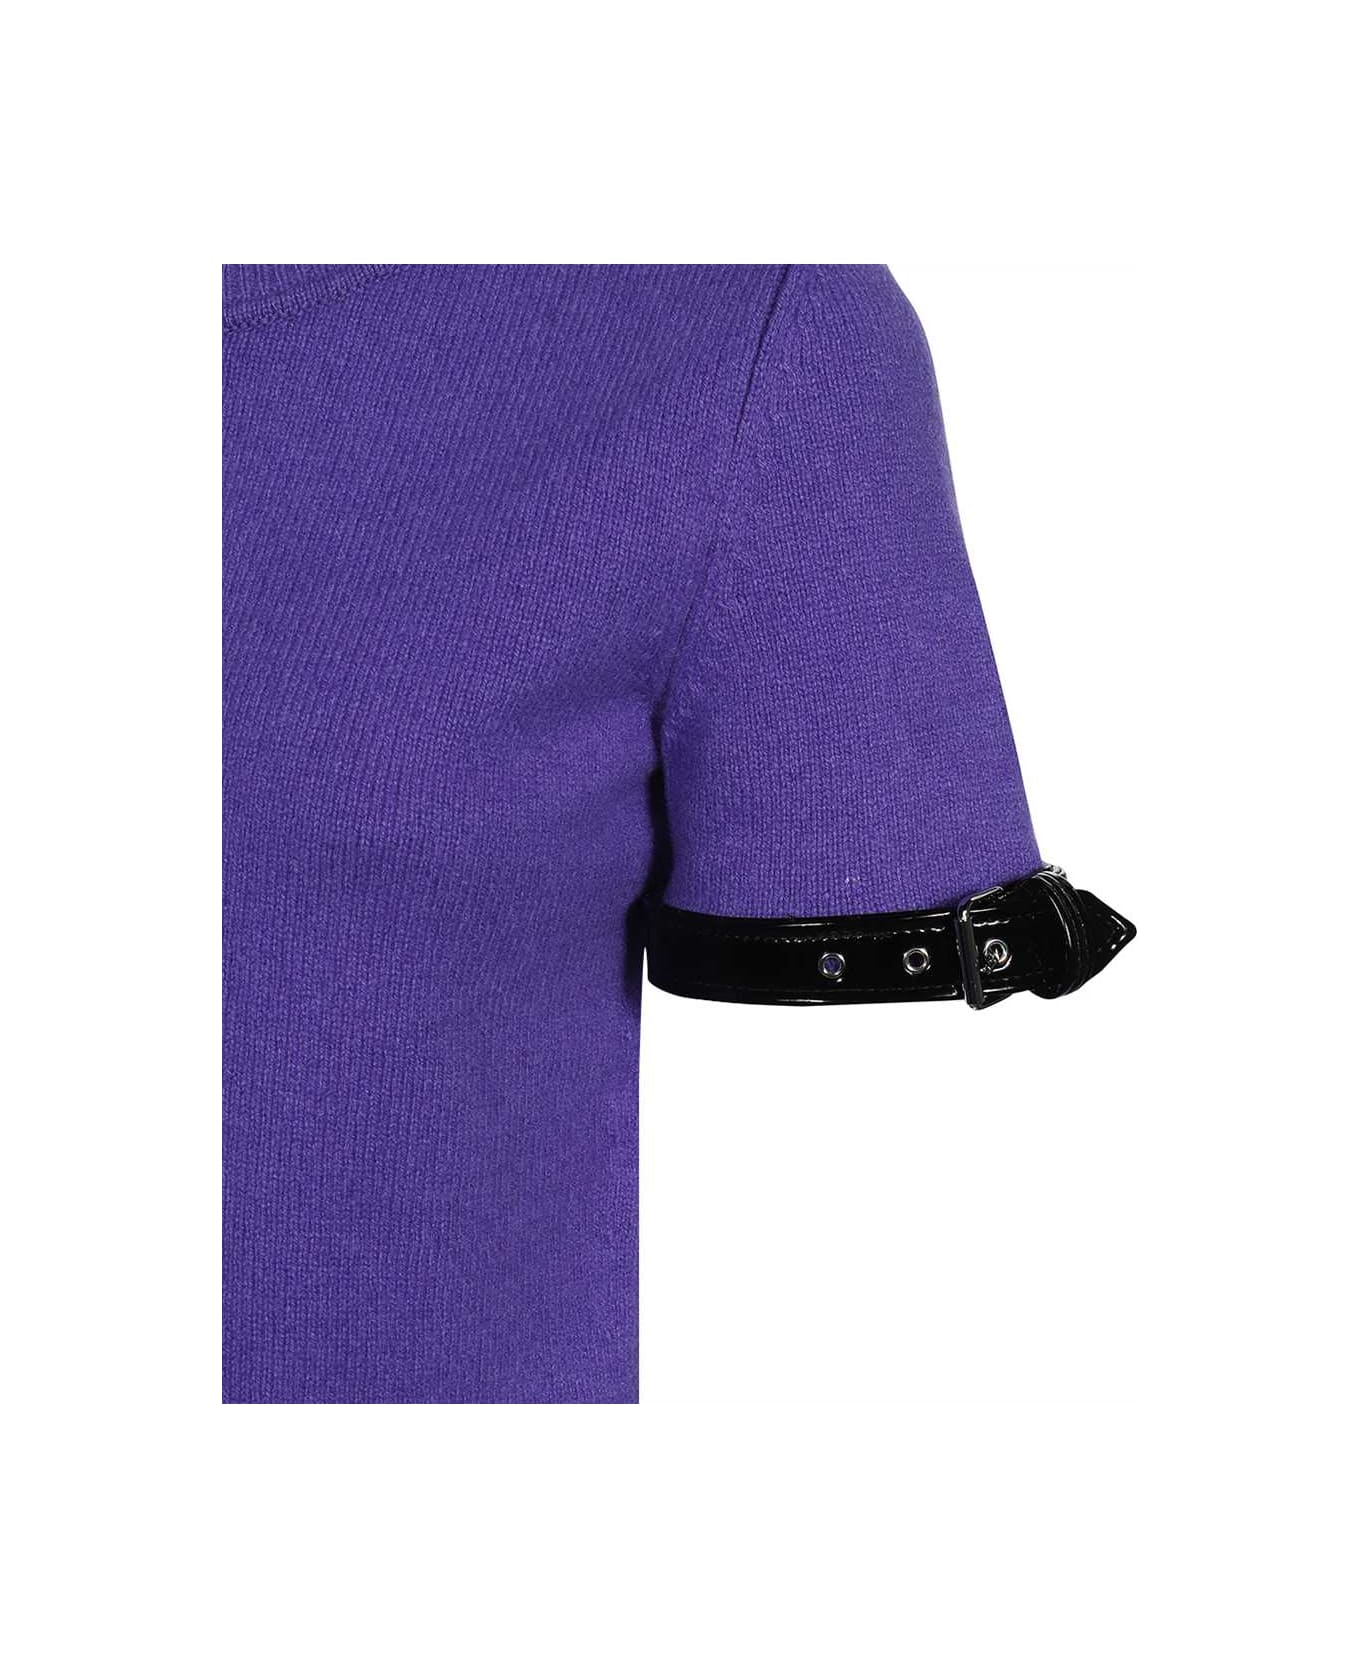 Moschino Wool Blend T-shirt - purple